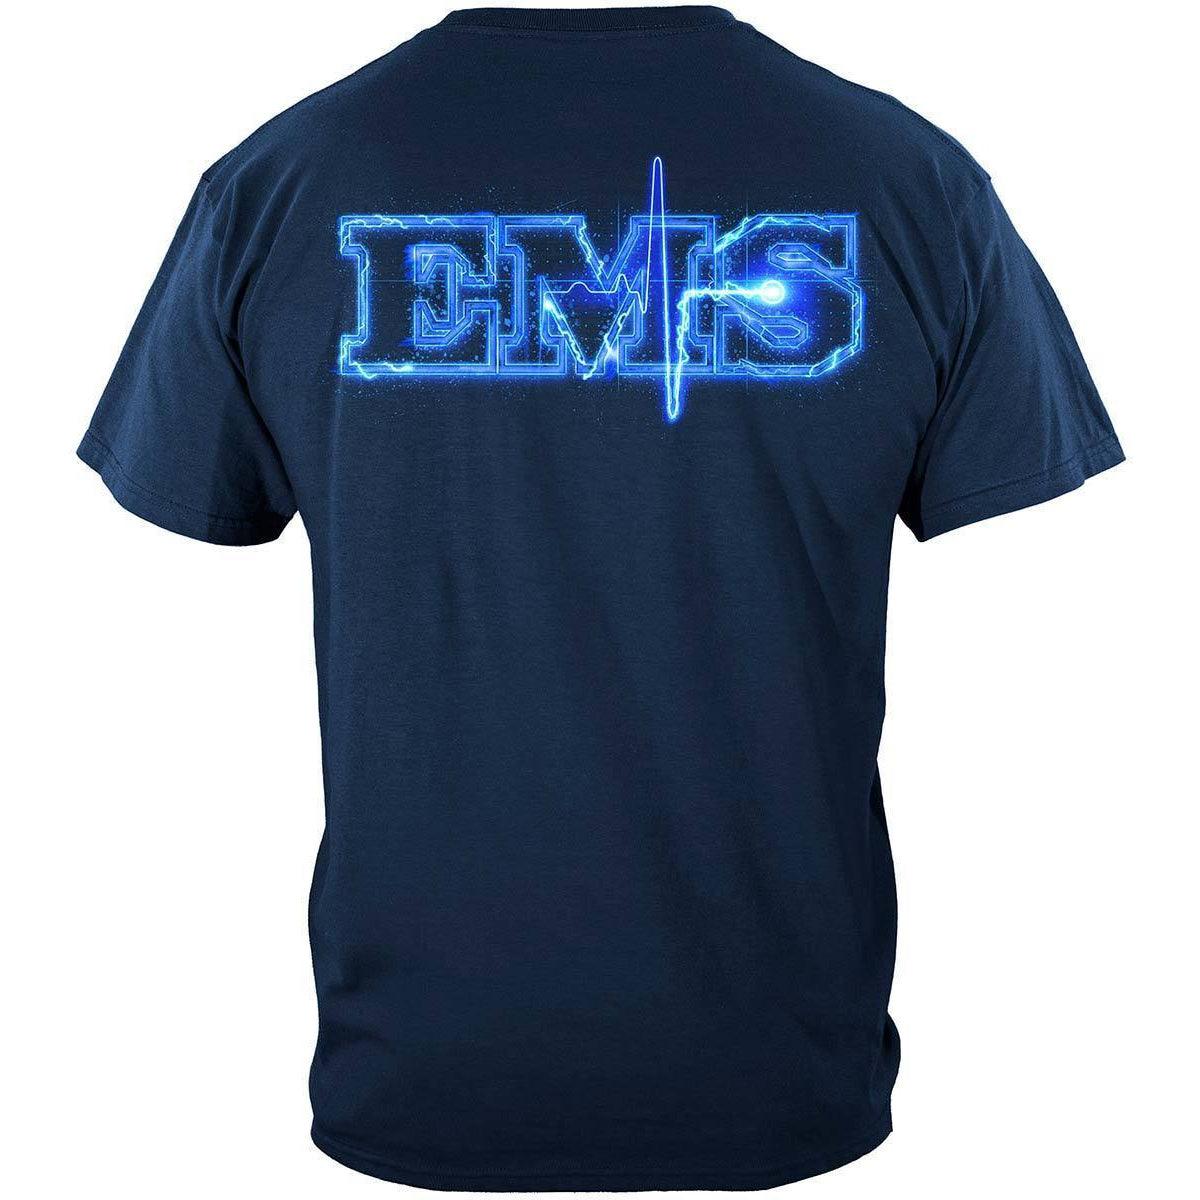 EMS Full Print Premium Long Sleeve - Military Republic